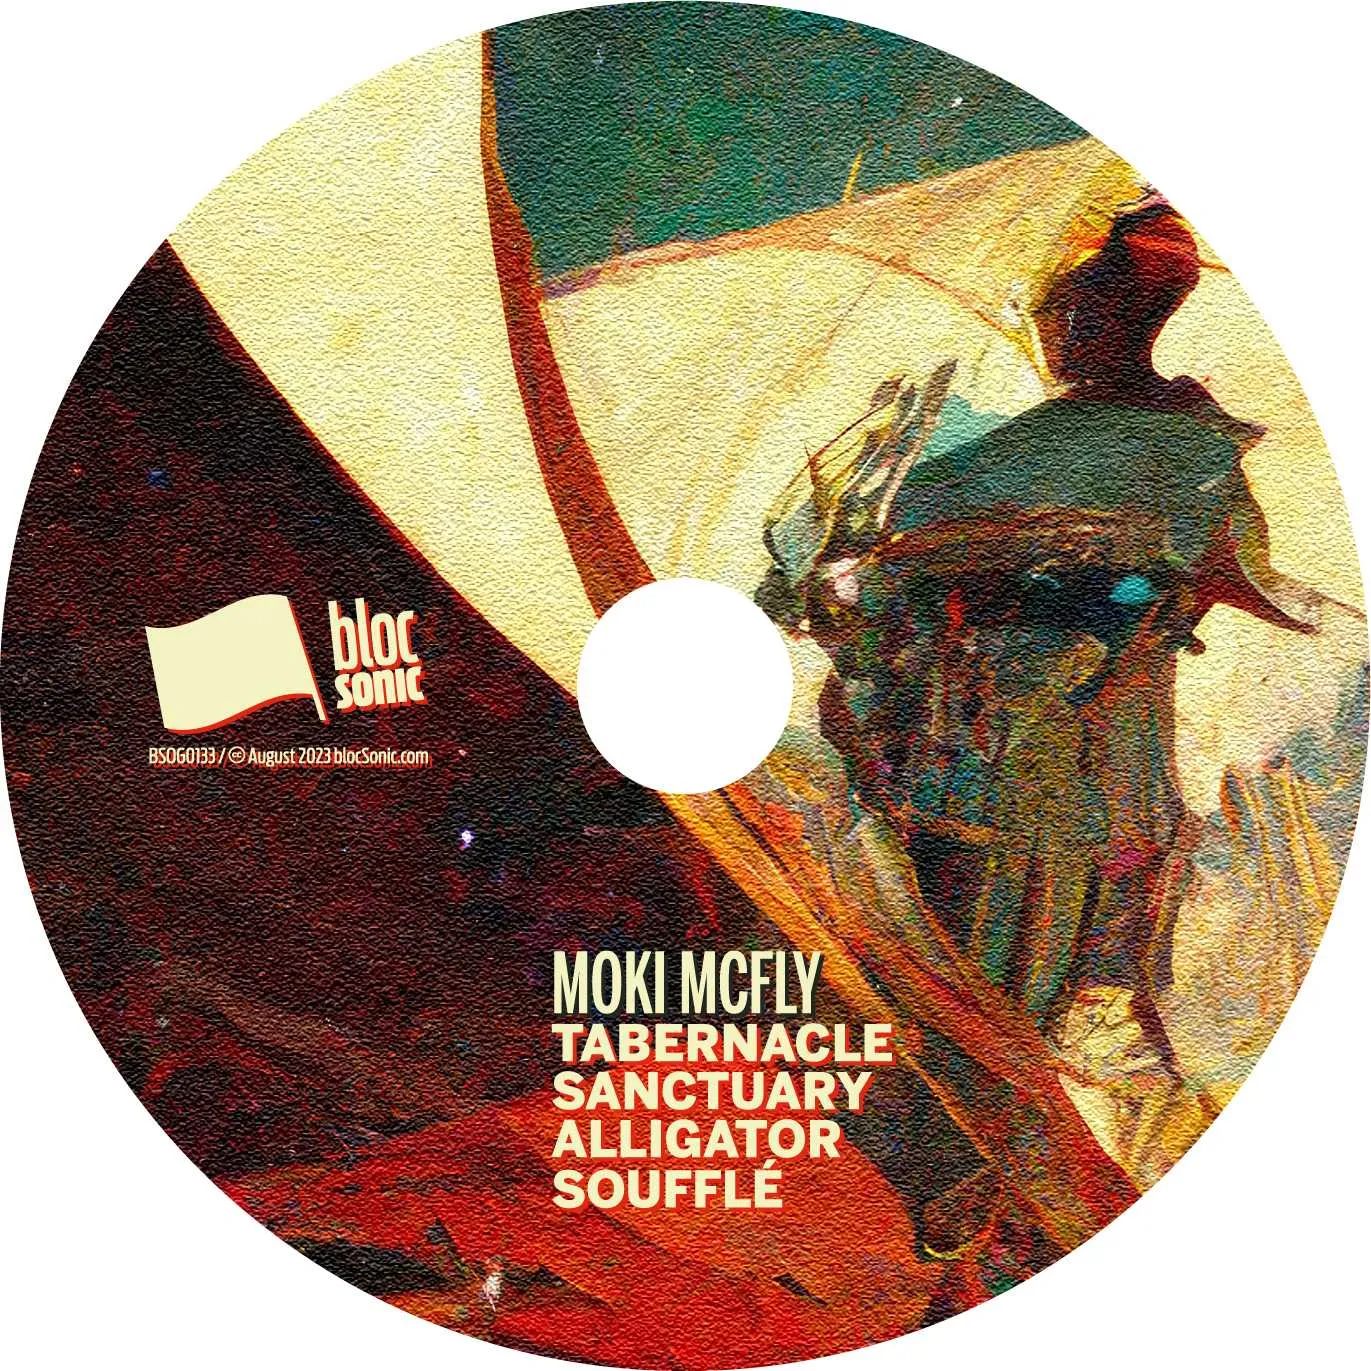 Album disc for “Tabernacle Sanctuary Alligator Soufflé” by Moki Mcfly